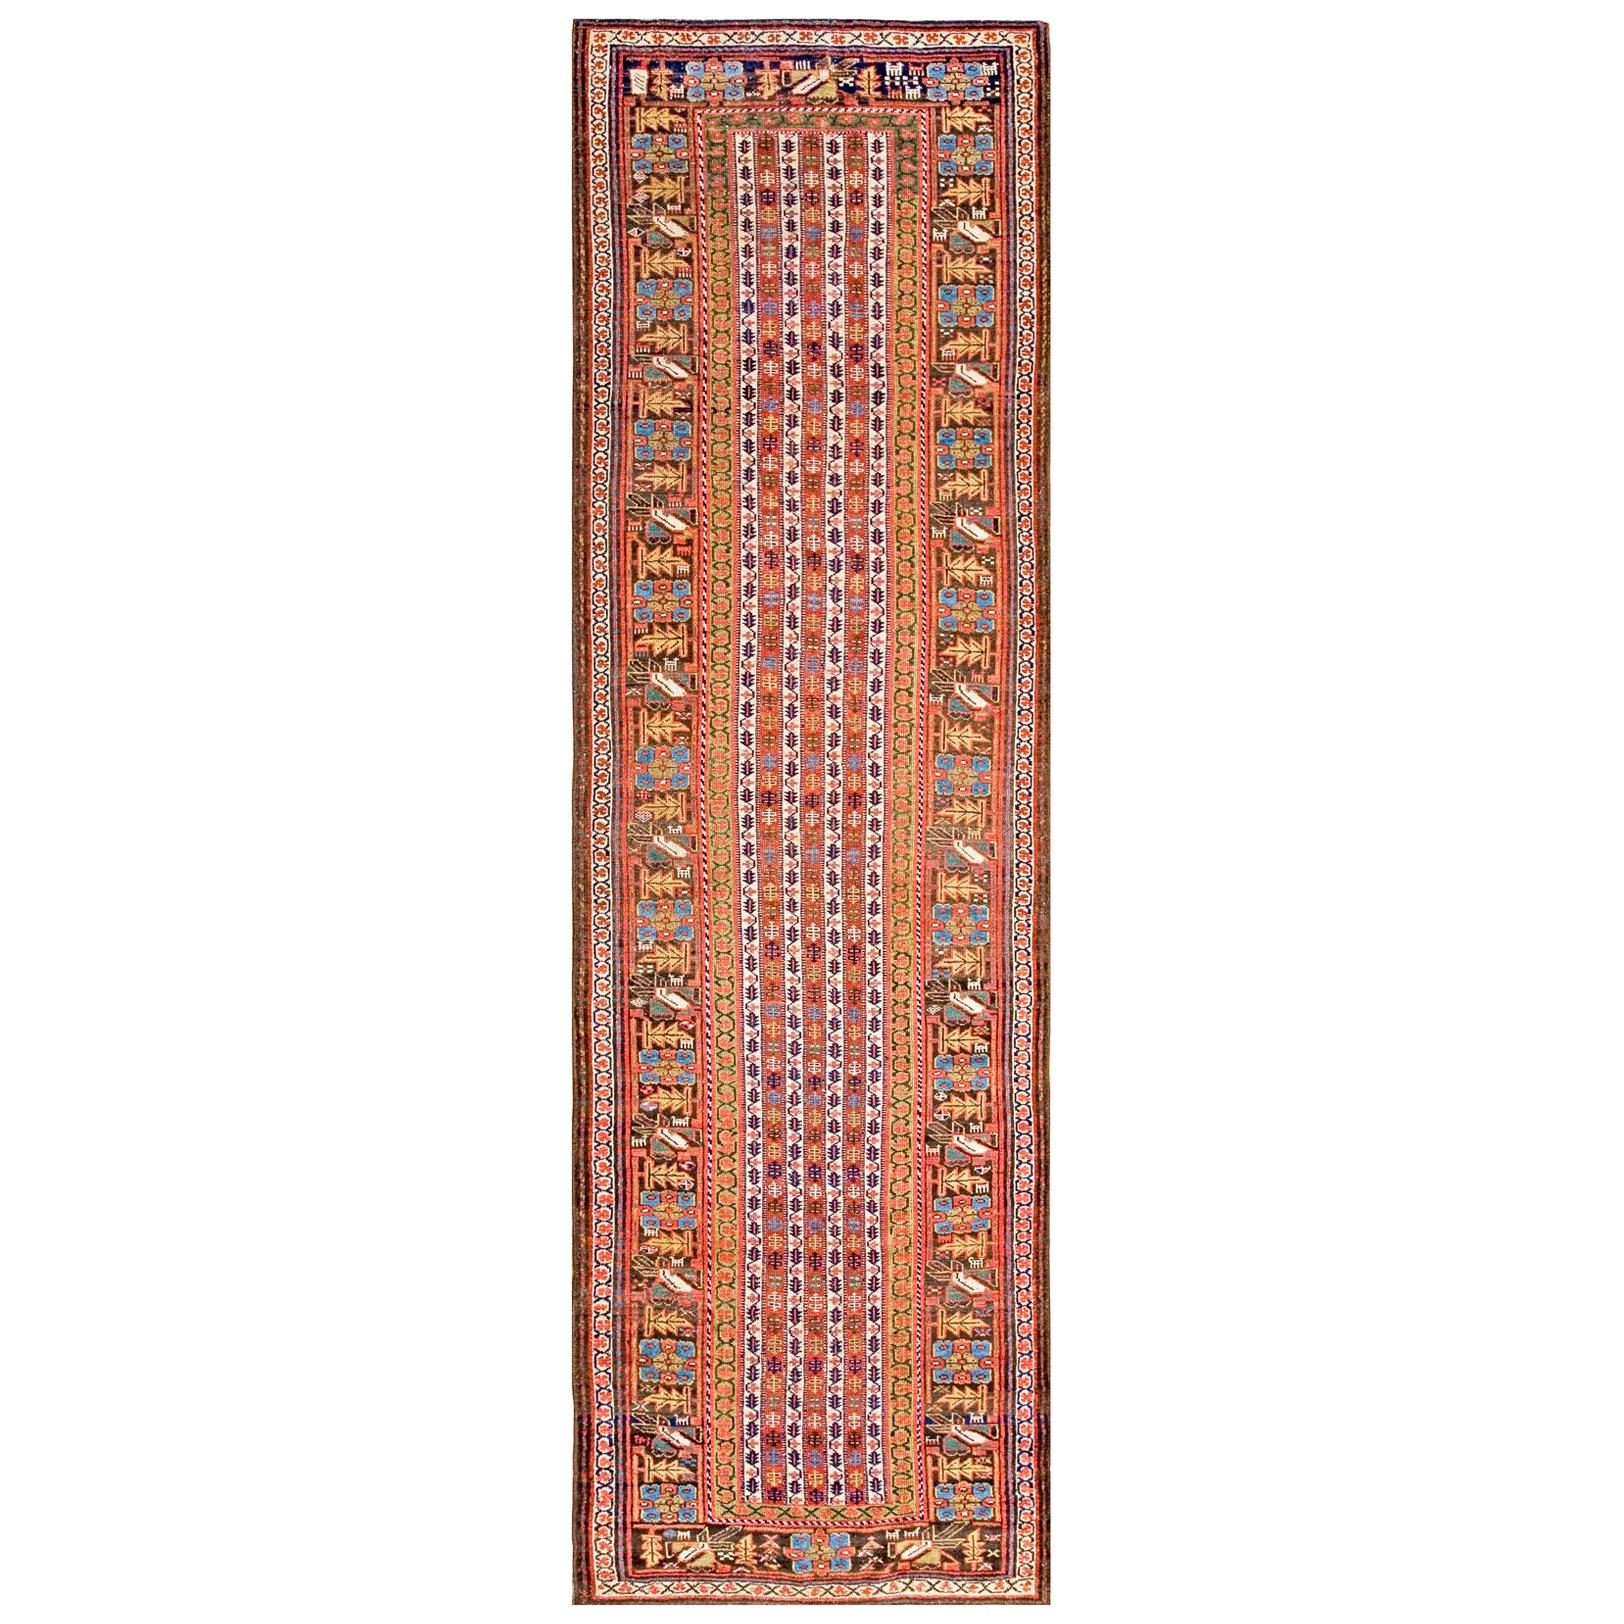 Mid-19th Century N.W. Persian Runner Carpet ( 3'6" x 11'8" - 107 x 356 )